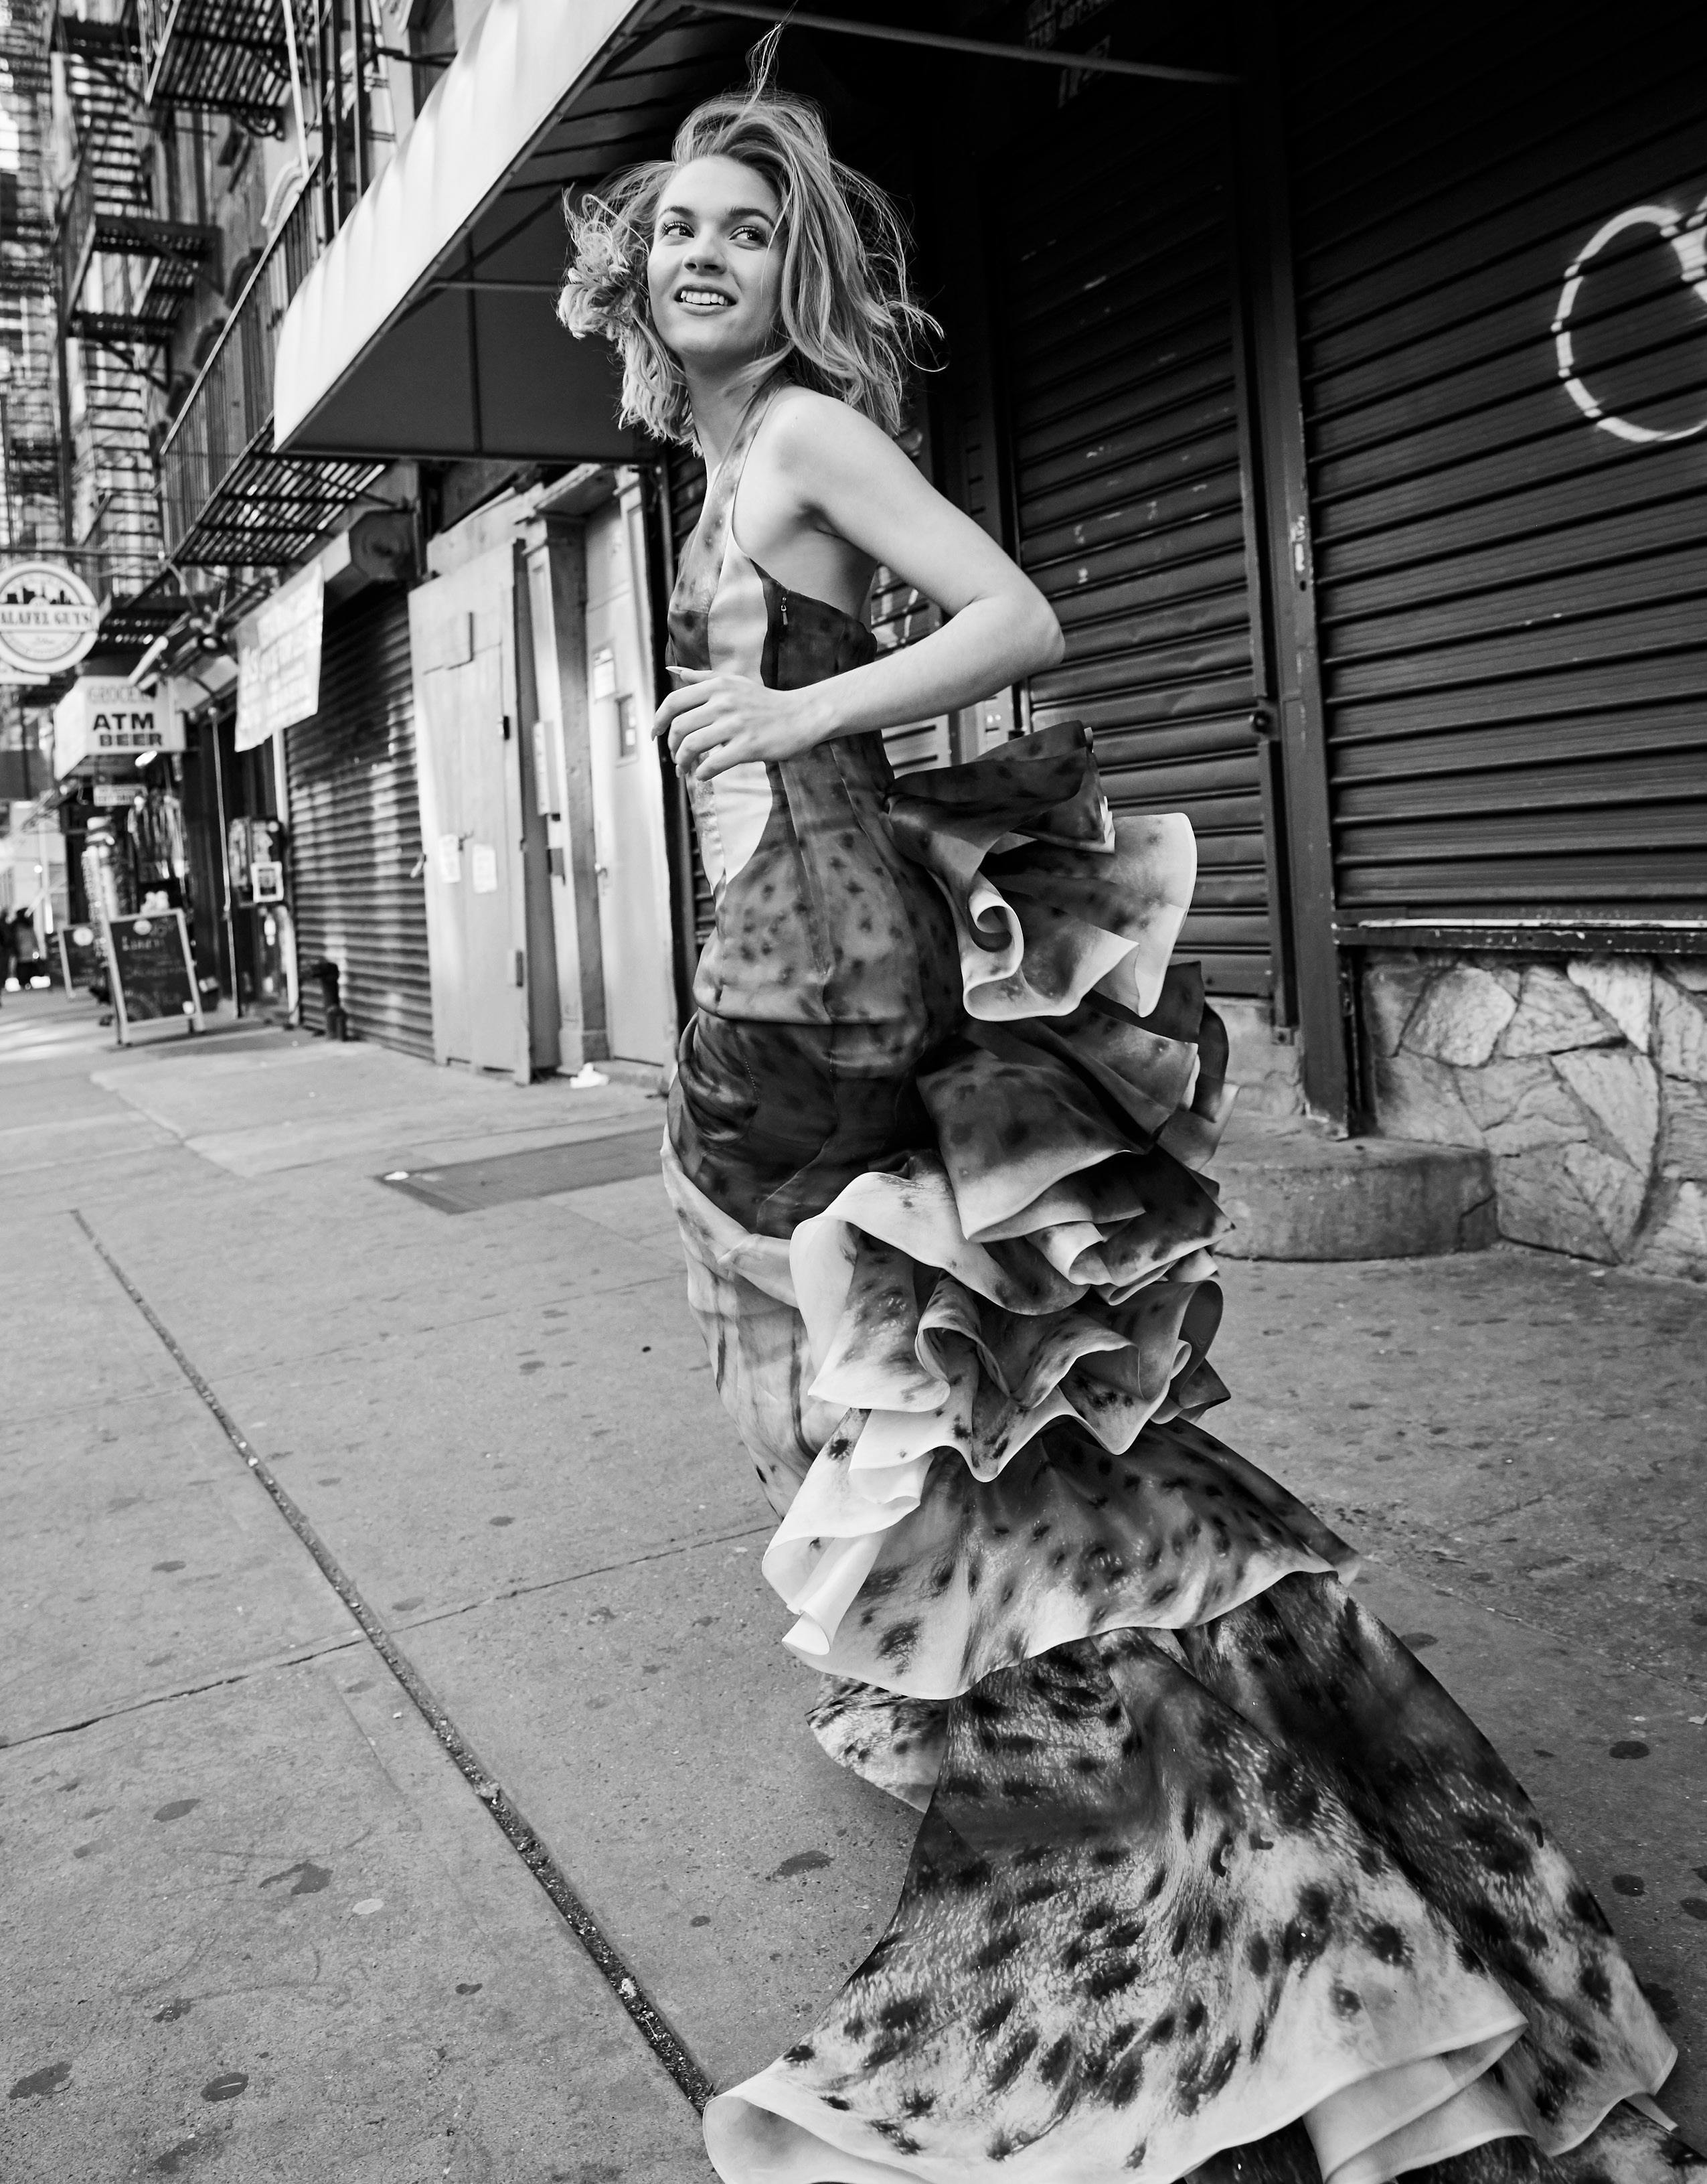 path street city urban dance pose leisure activities clothing dress person female